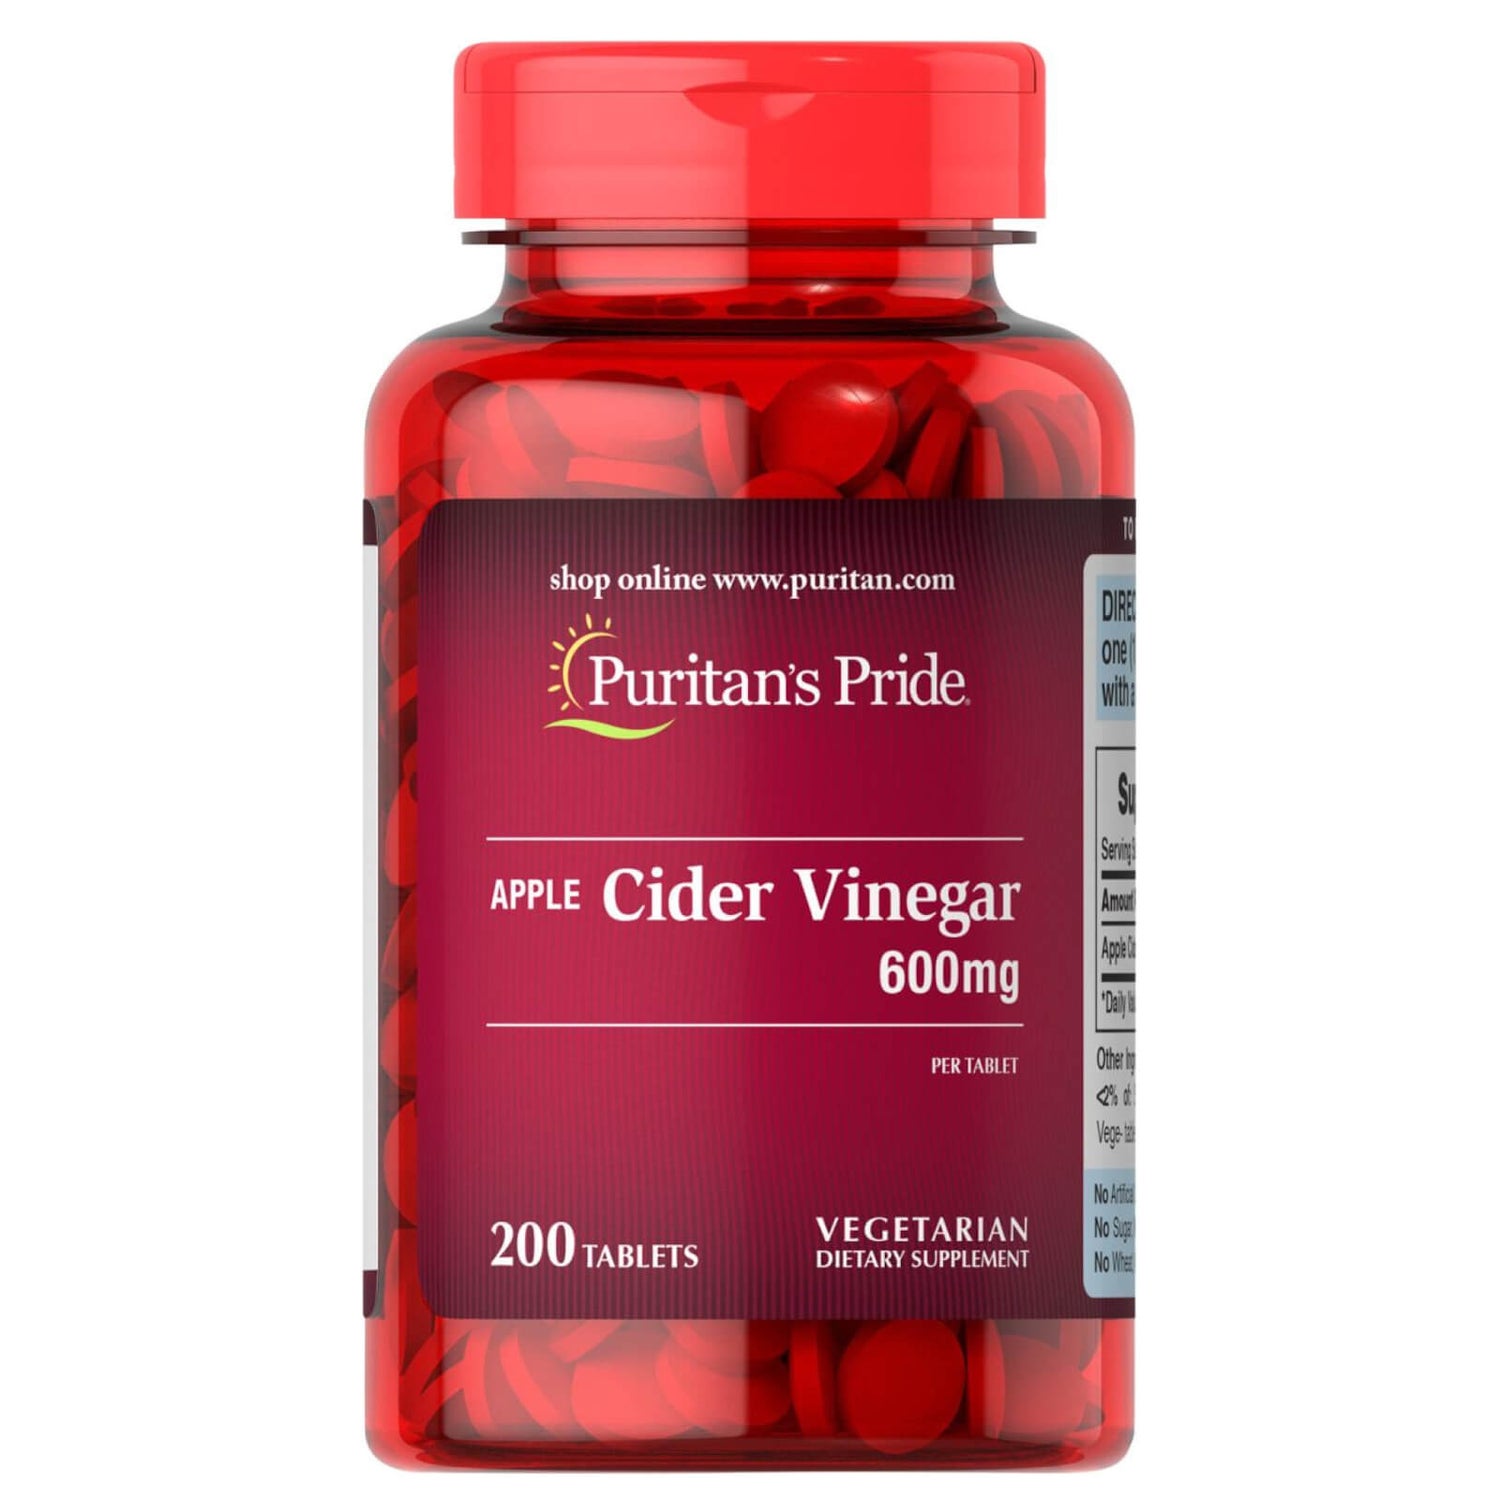 Puritan's Pride Apple Cider Vinegar 600mg - 200 Tablets